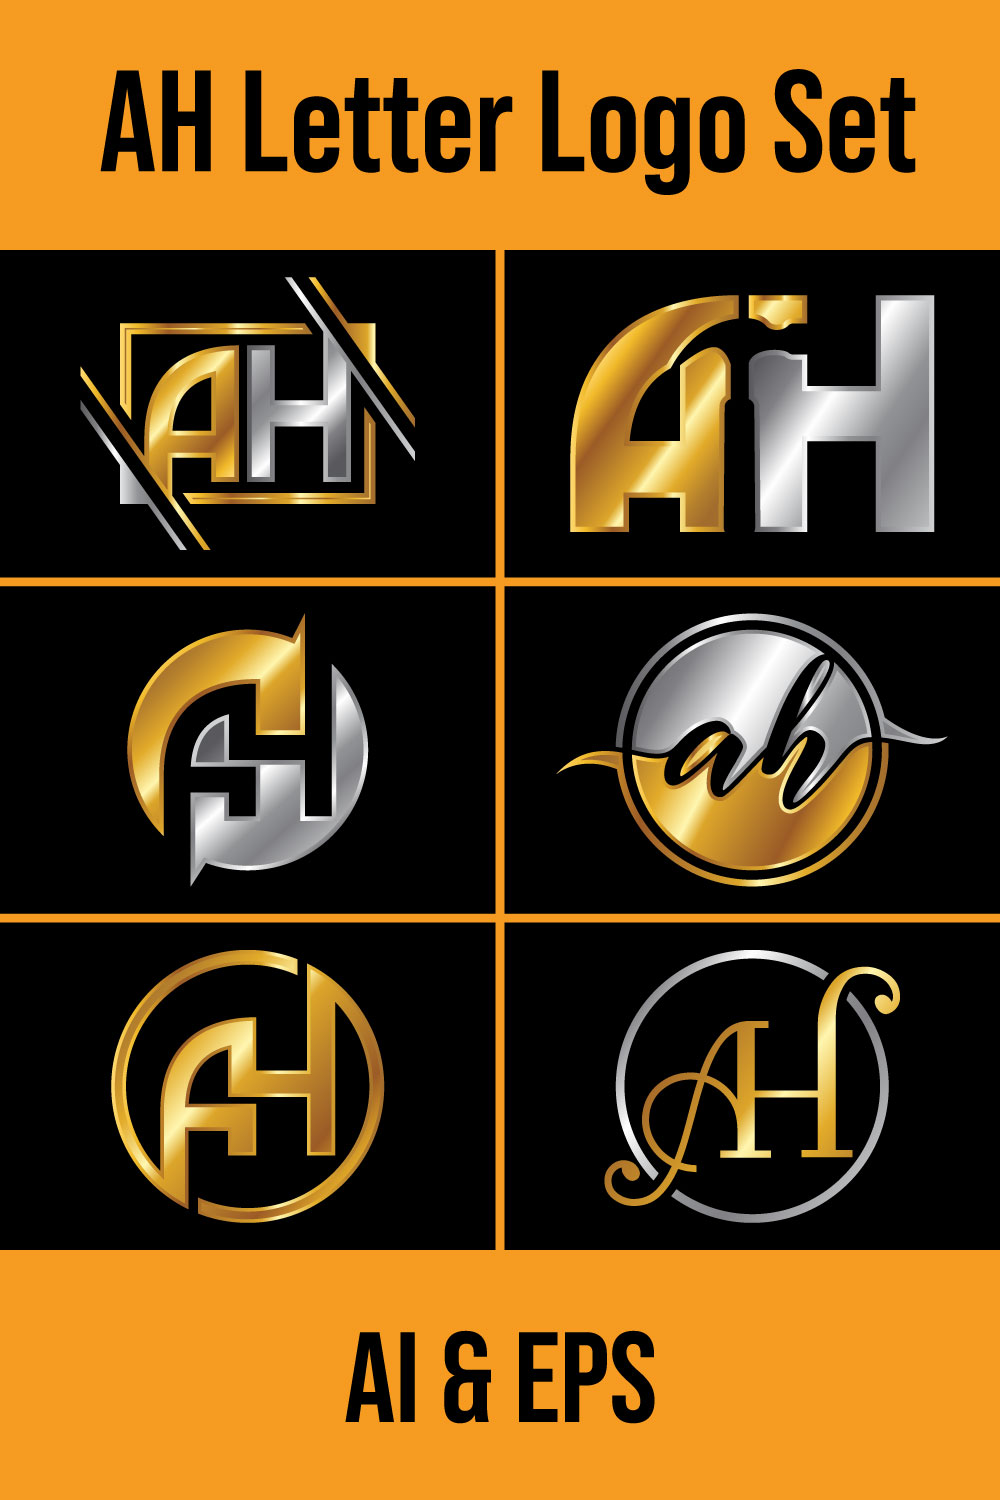 A-H Initial Letter Logo Design pinterest image.